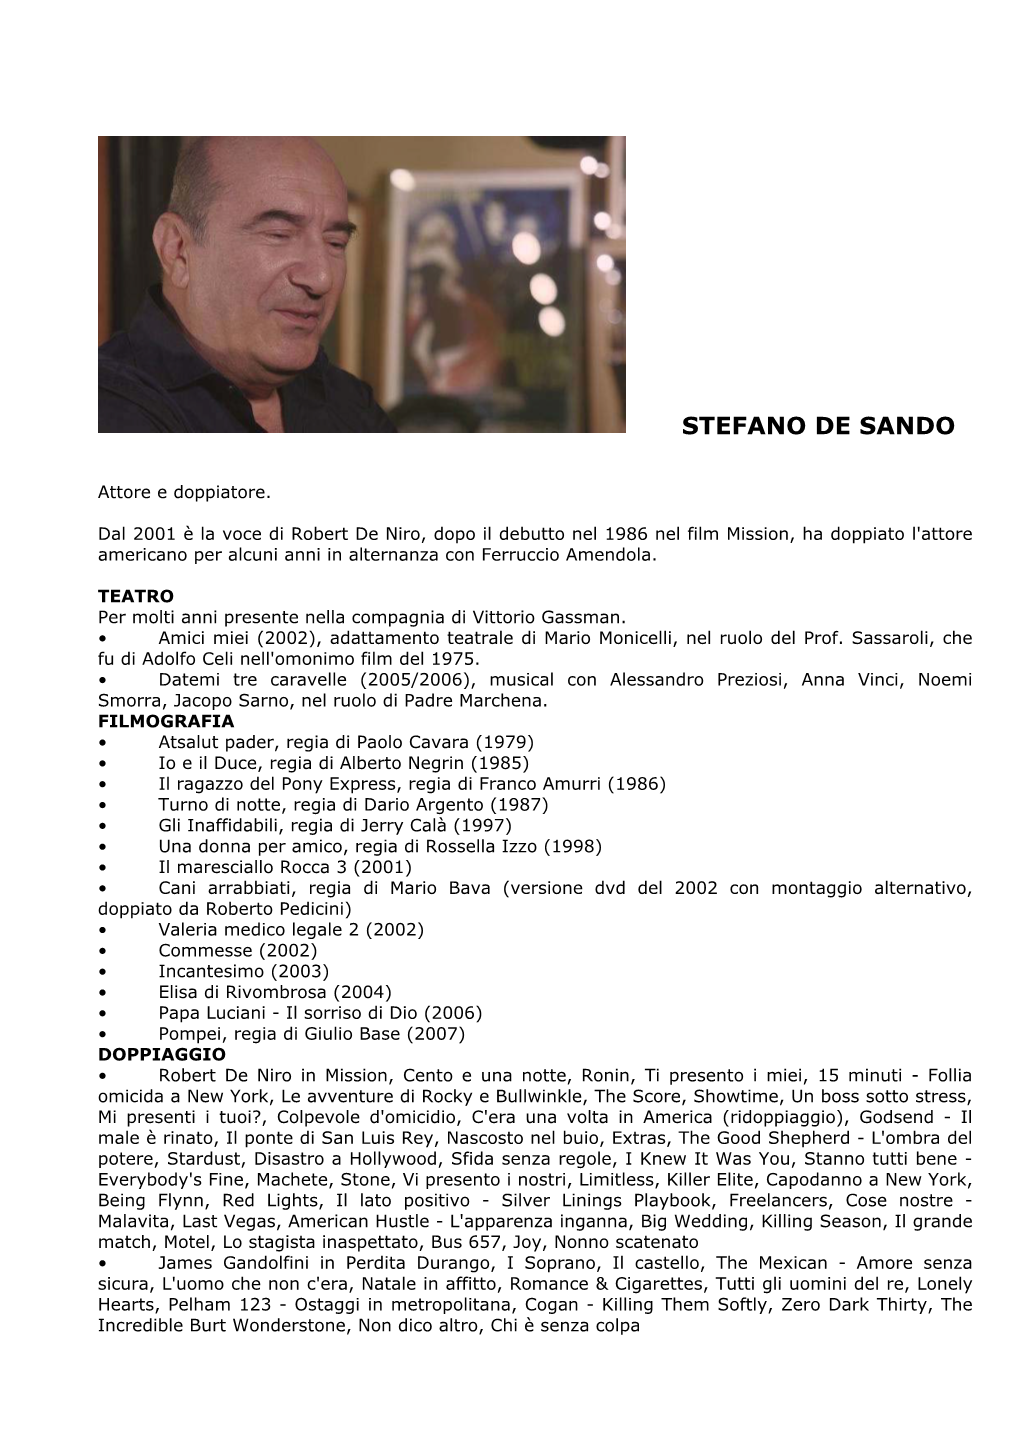 Stefano De Sando